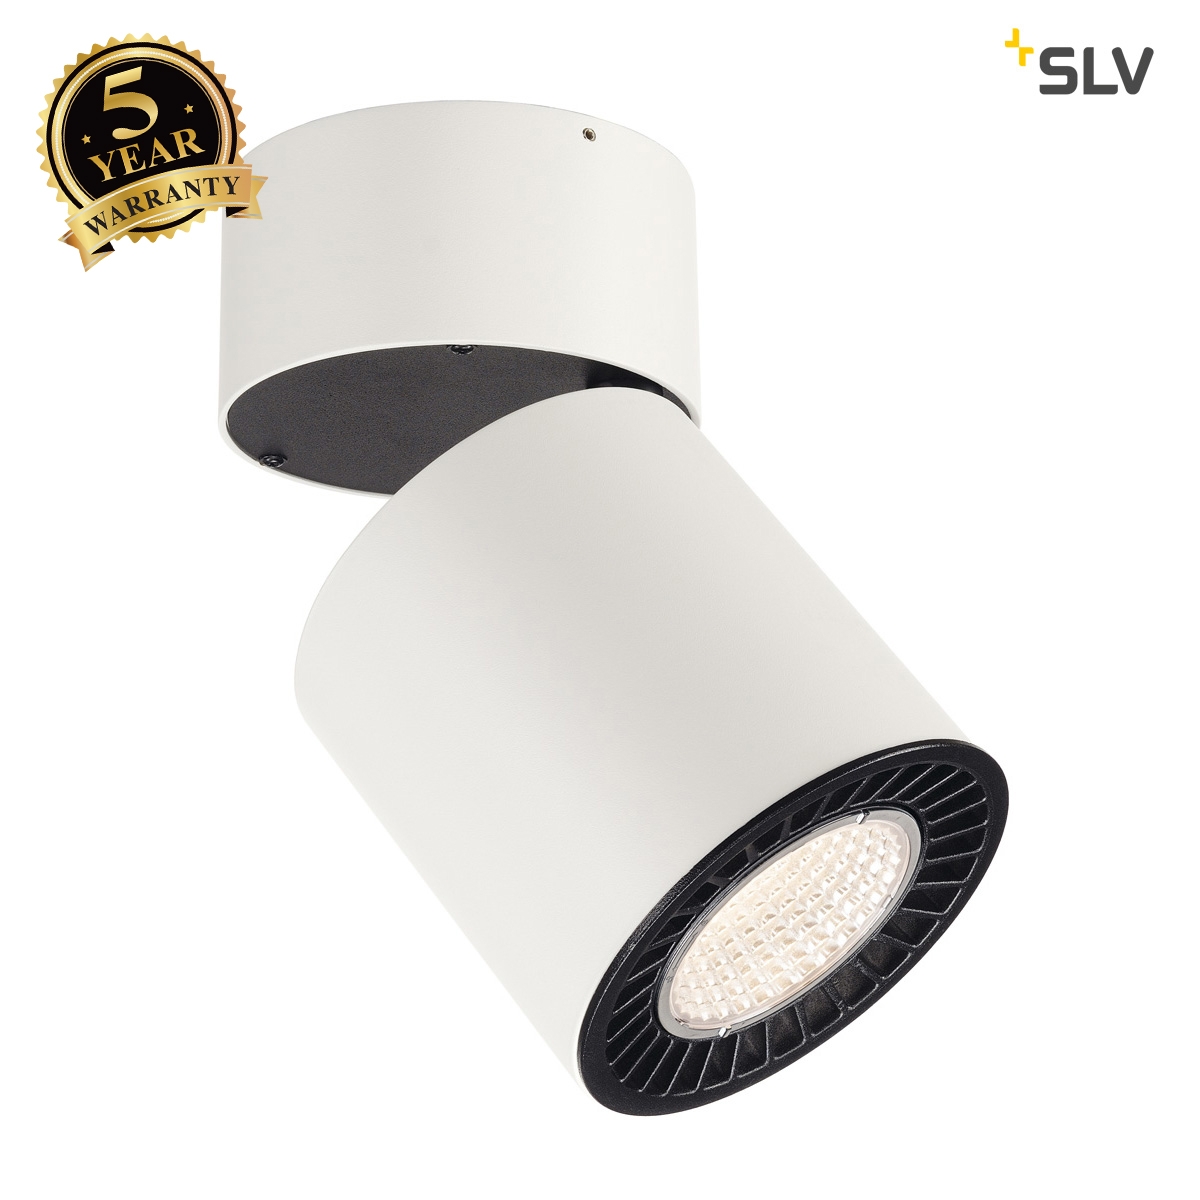 SLV SUPROS CL ceiling light, round, white, 2100lm, 3000K, SLM LED, 60° reflector 114131